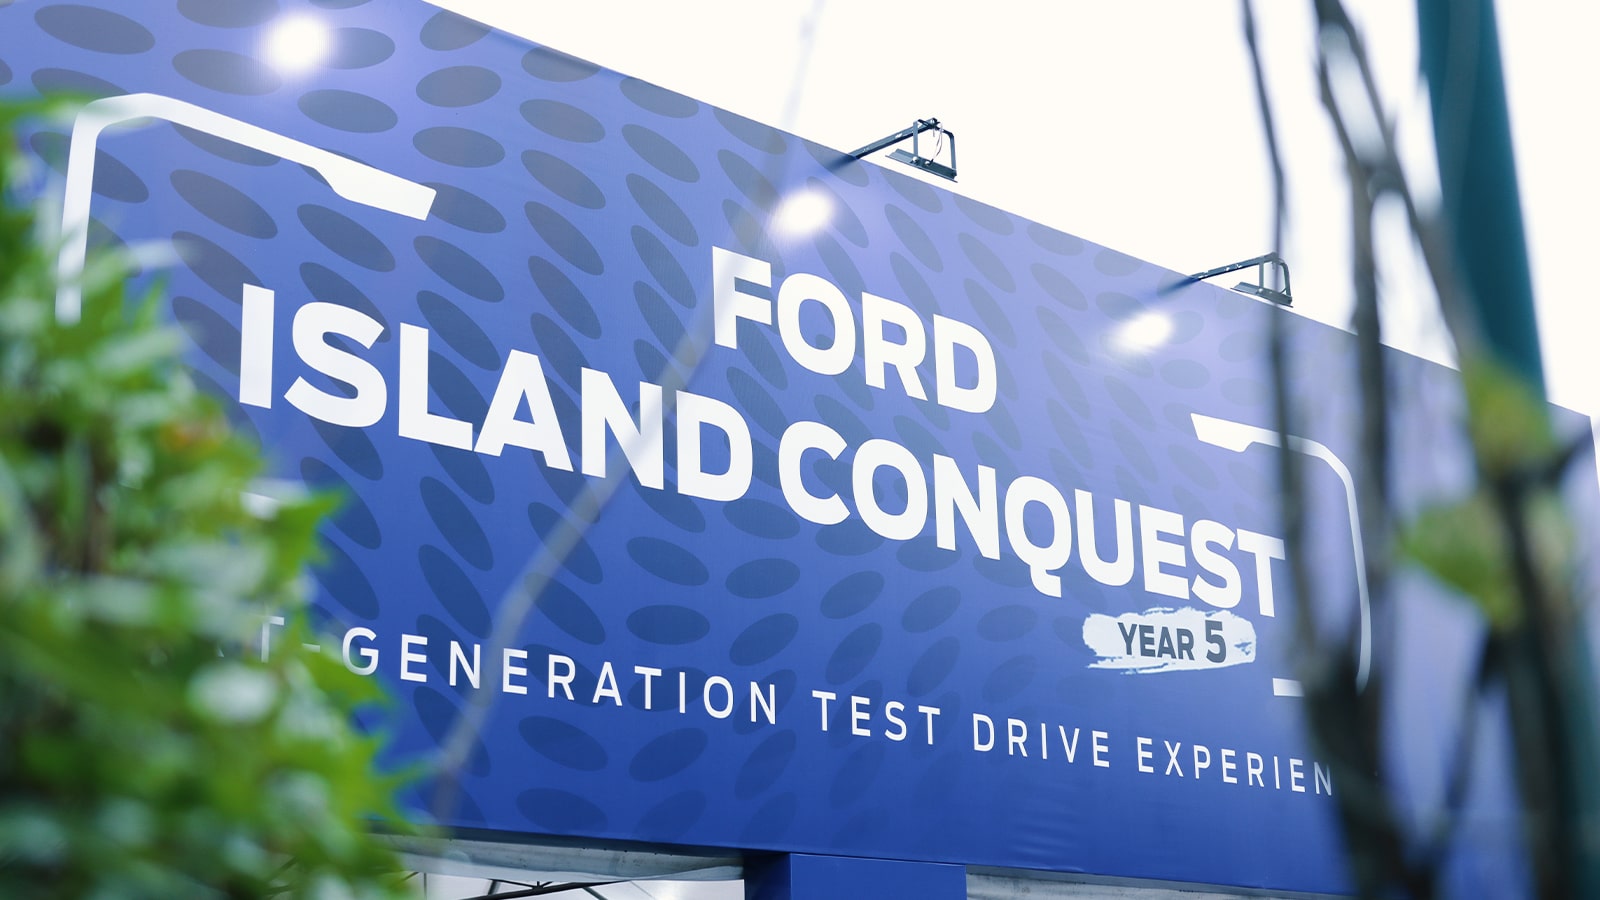 Ford Island Conquest 1 Min